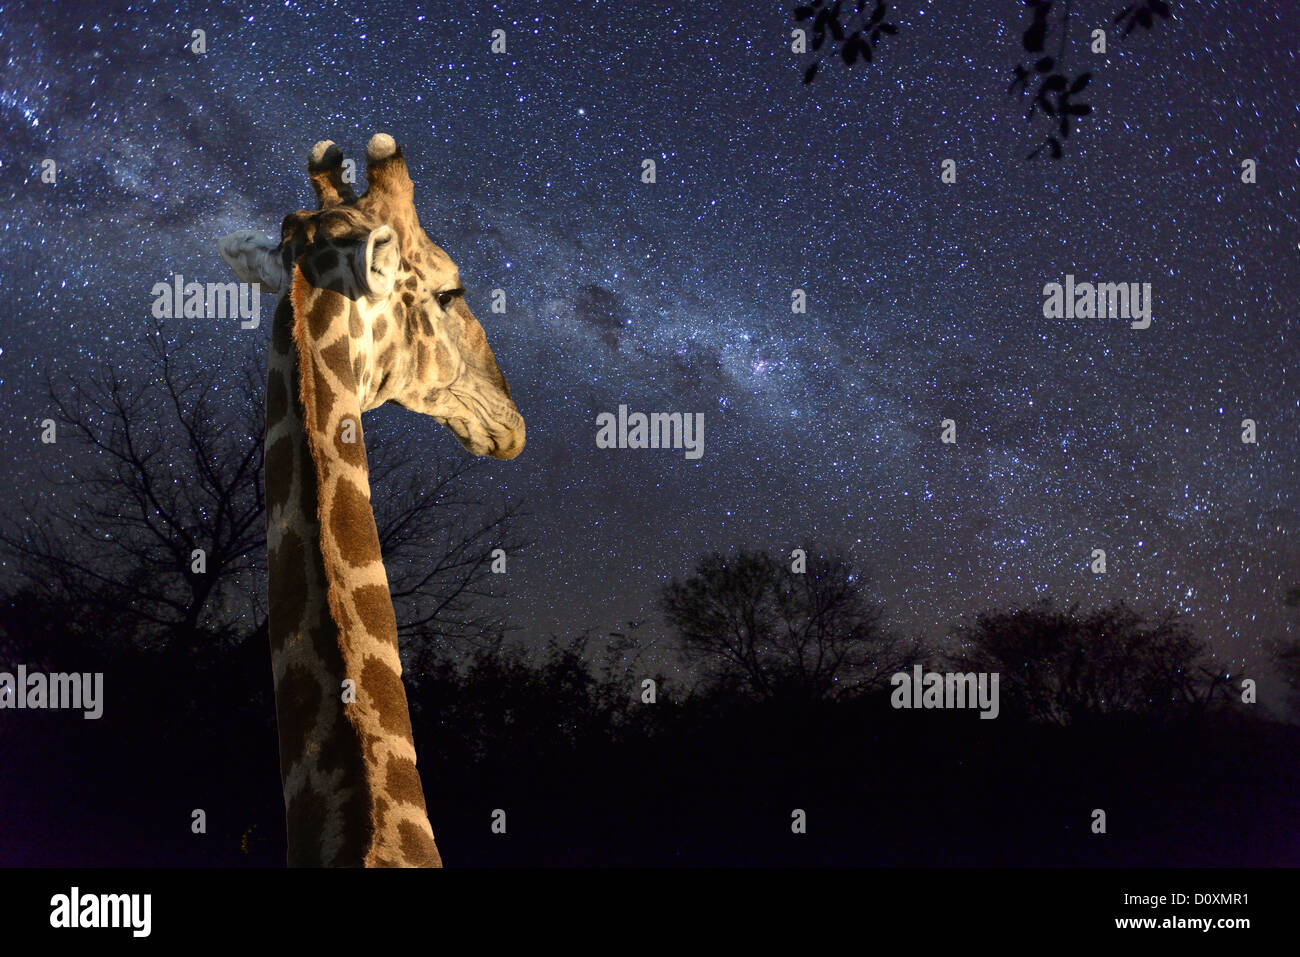 Africa, Southern, Namibiai, night, sky, stars, astro, photography, spangled sky, starlit, giraffe, Grootfontein Stock Photo